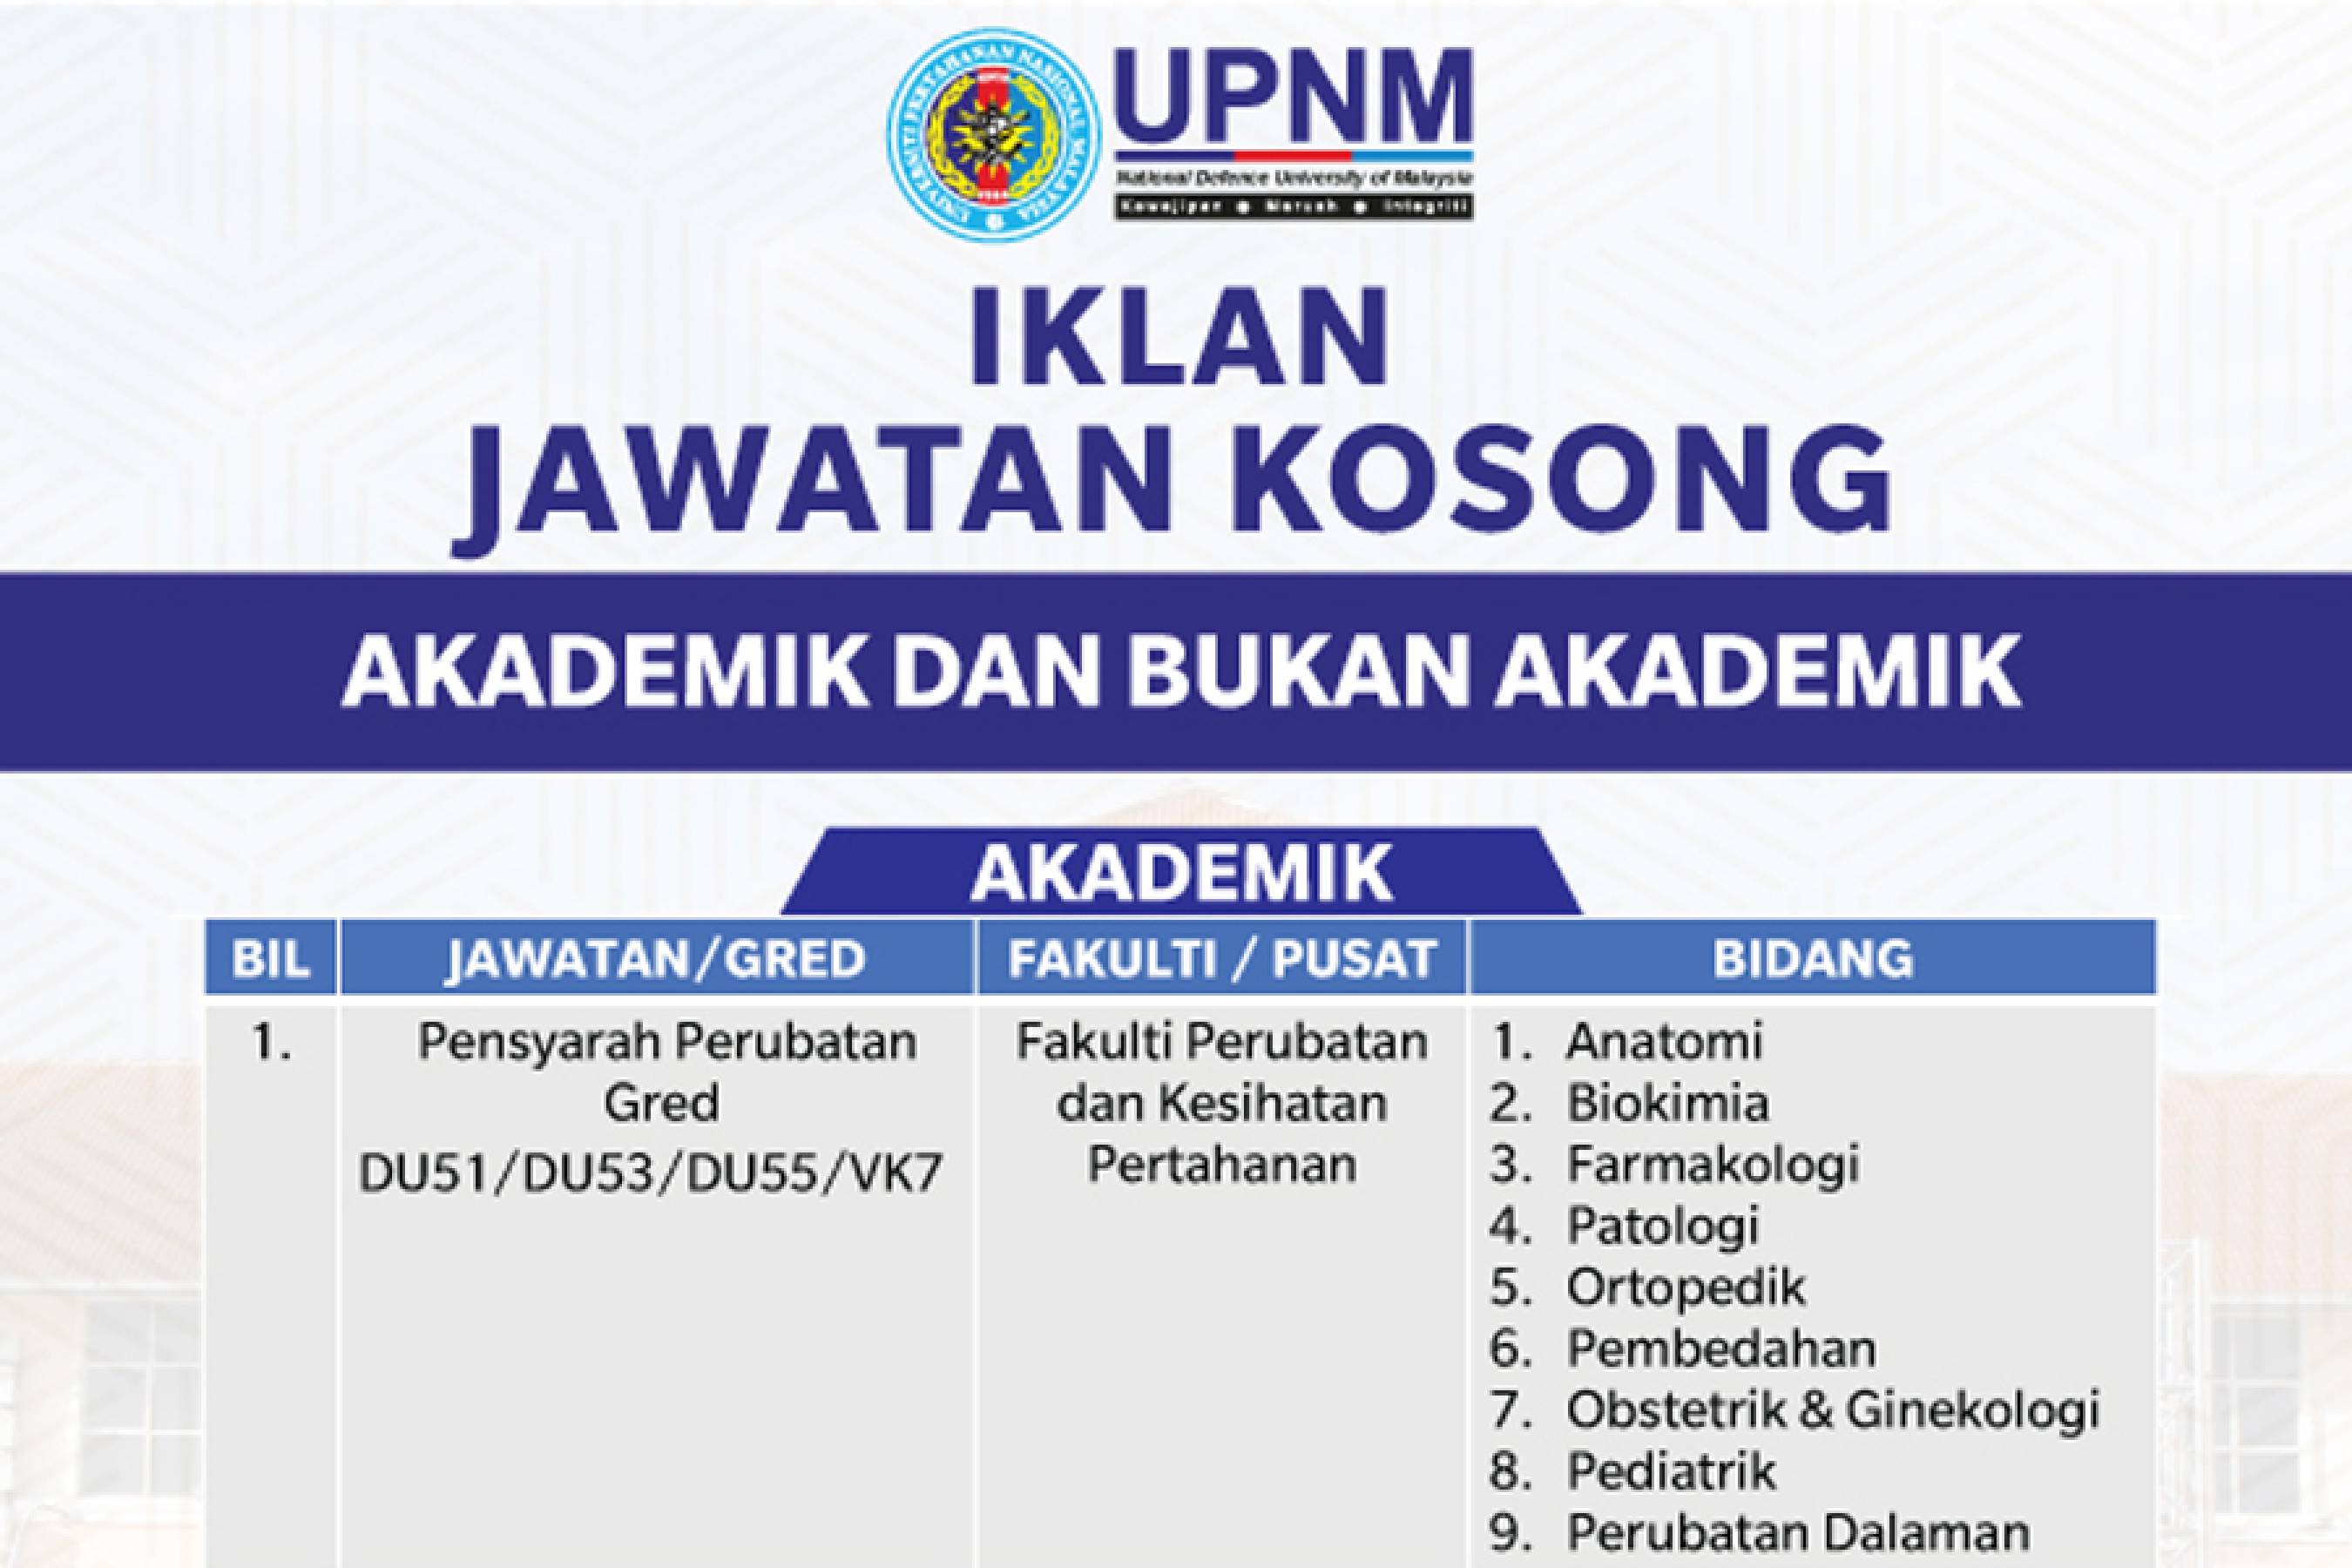 Hebahan Iklan Kekosongan Jawatan di UPNM